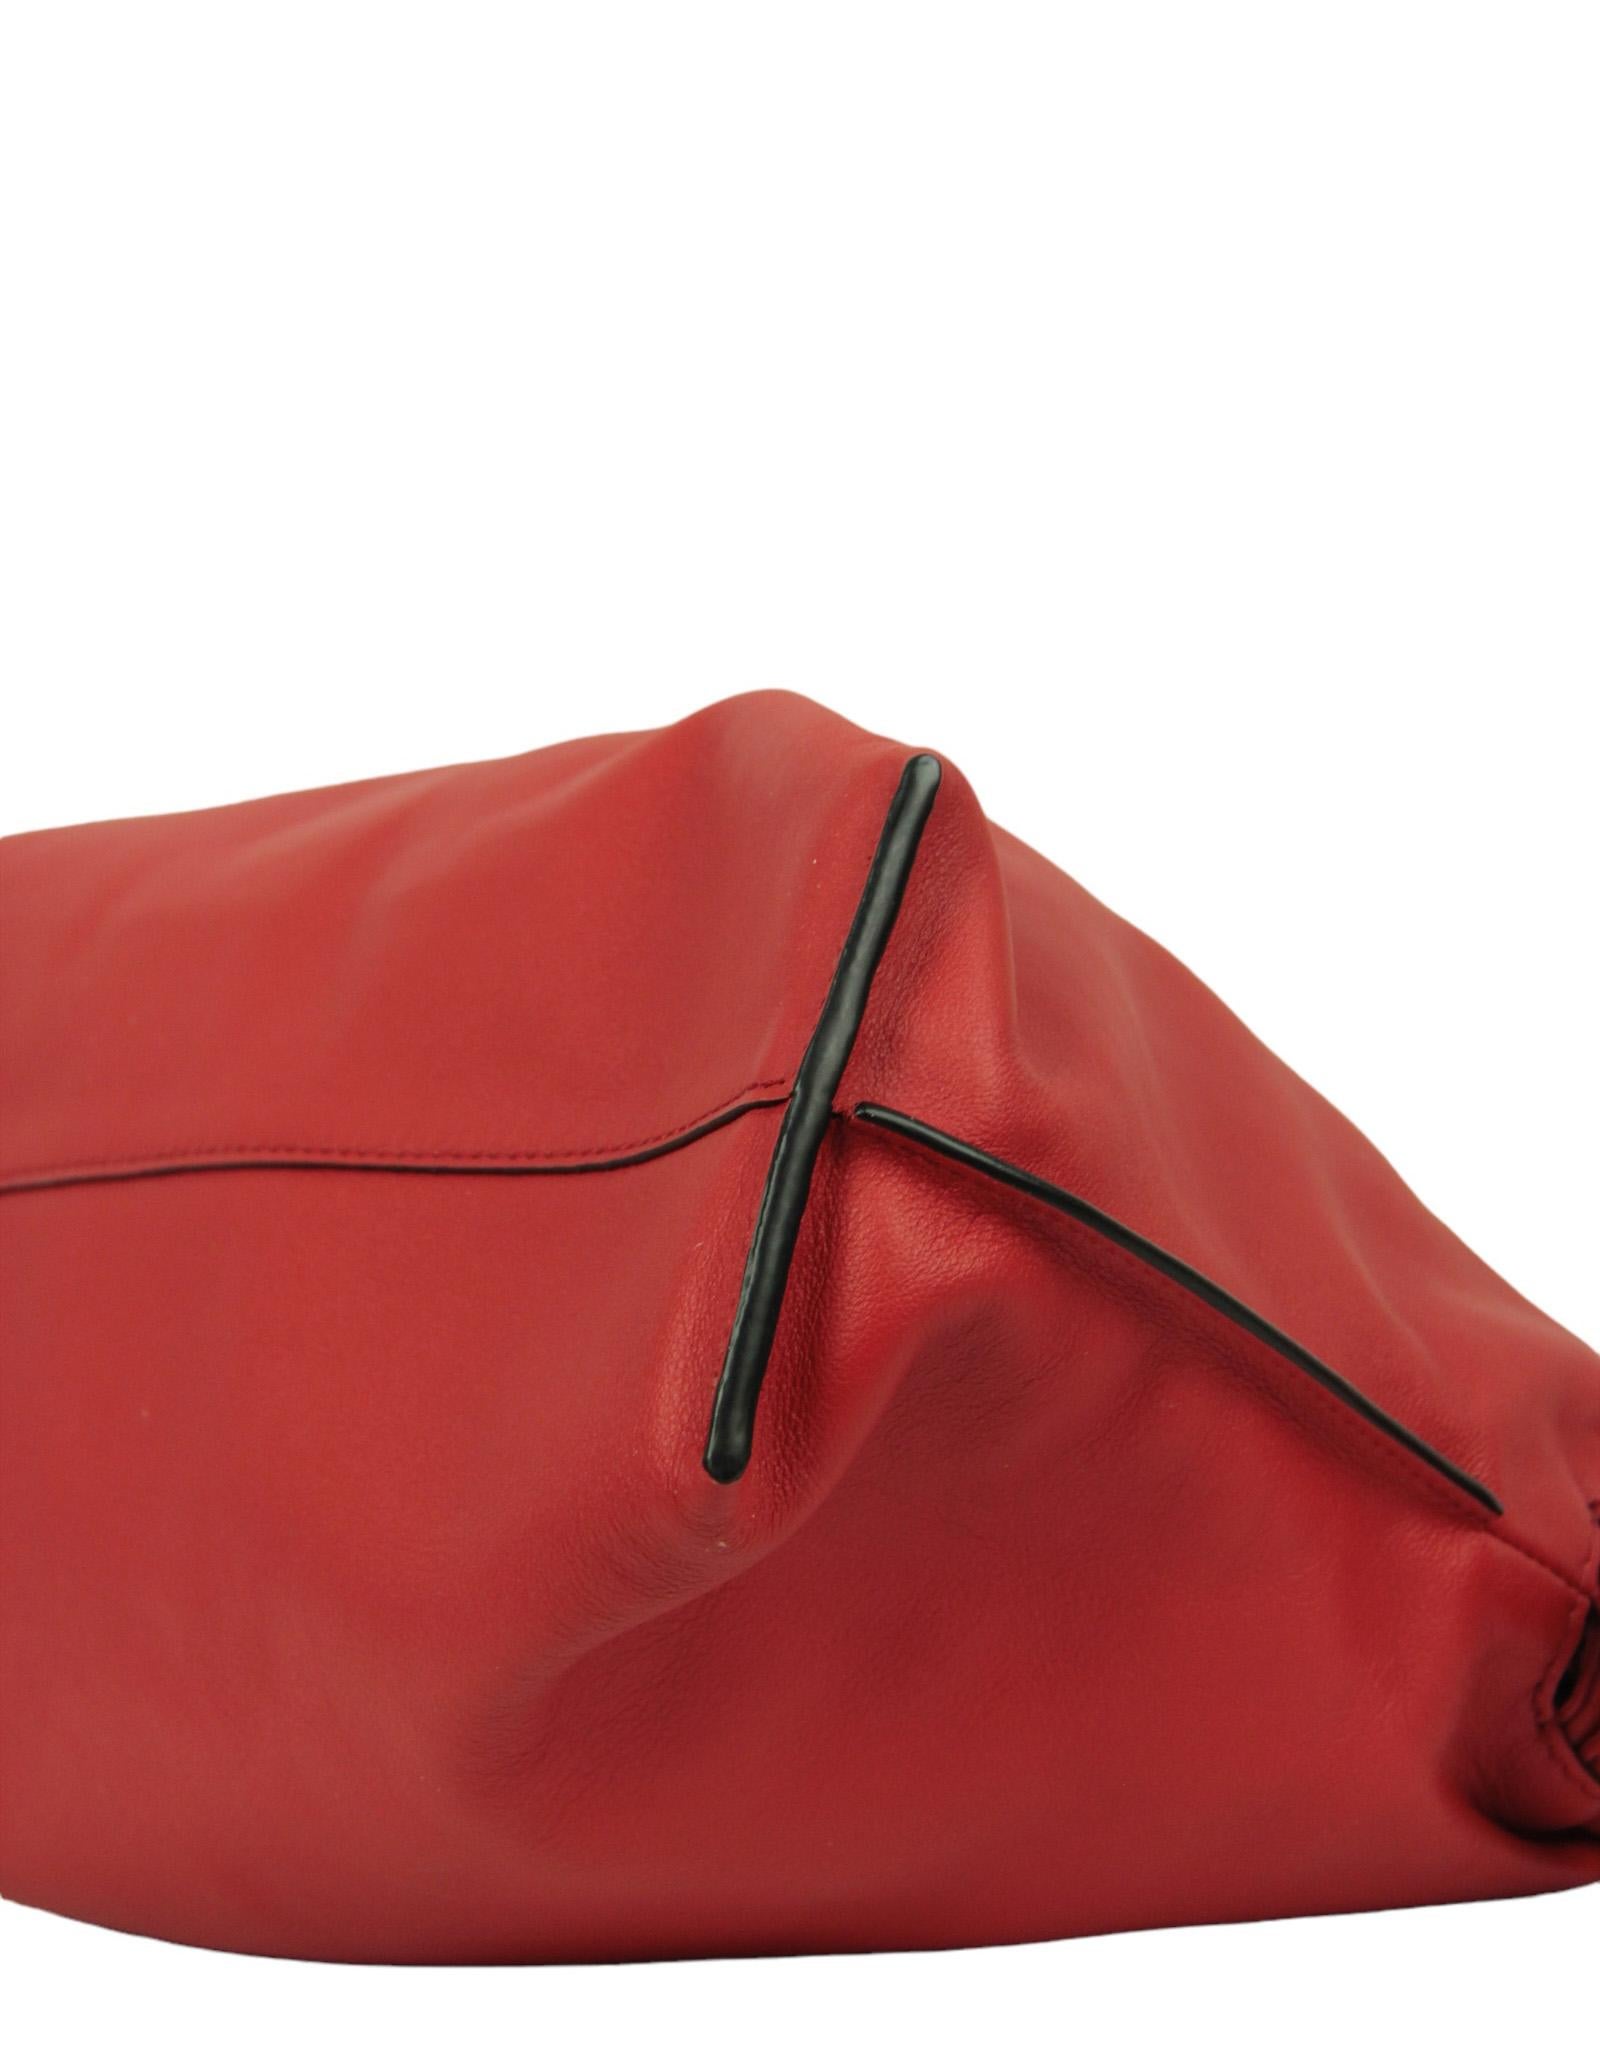 Loewe Red Calfskin Leather Flamenco Bag w/ Donut Chain For Sale 1